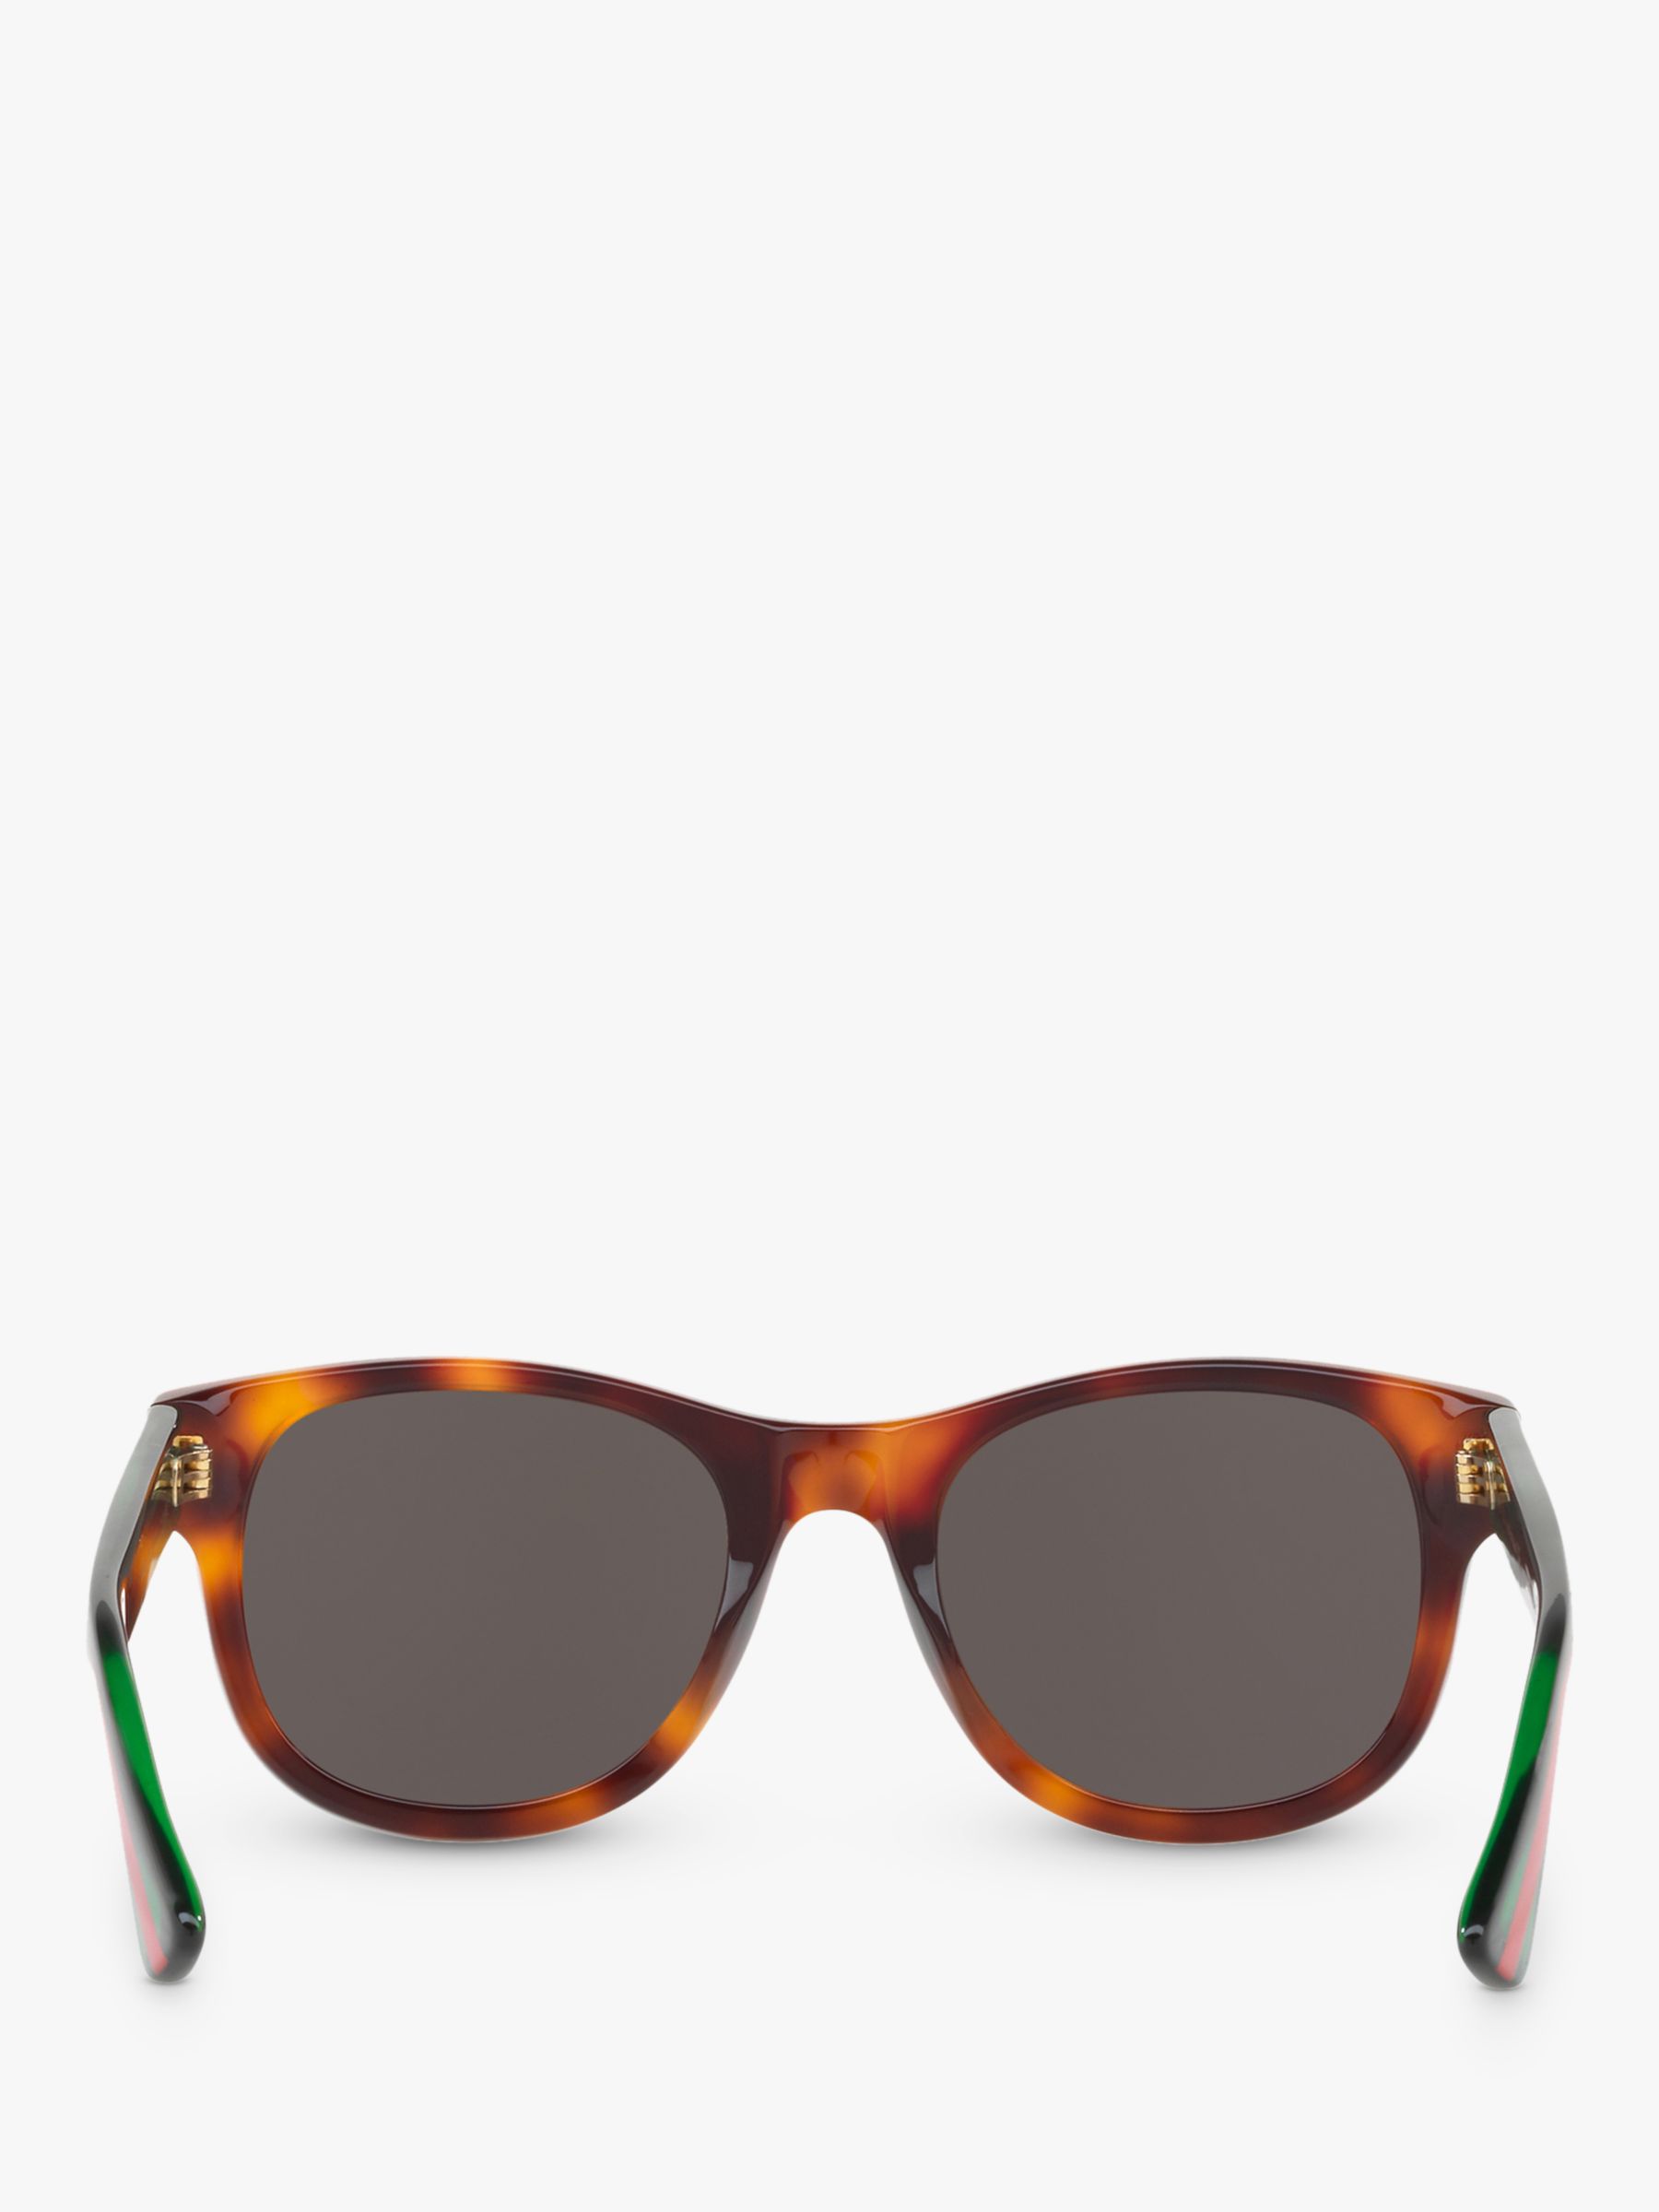 Buy Gucci GG0003S Men's D-Frame Sunglasses Online at johnlewis.com